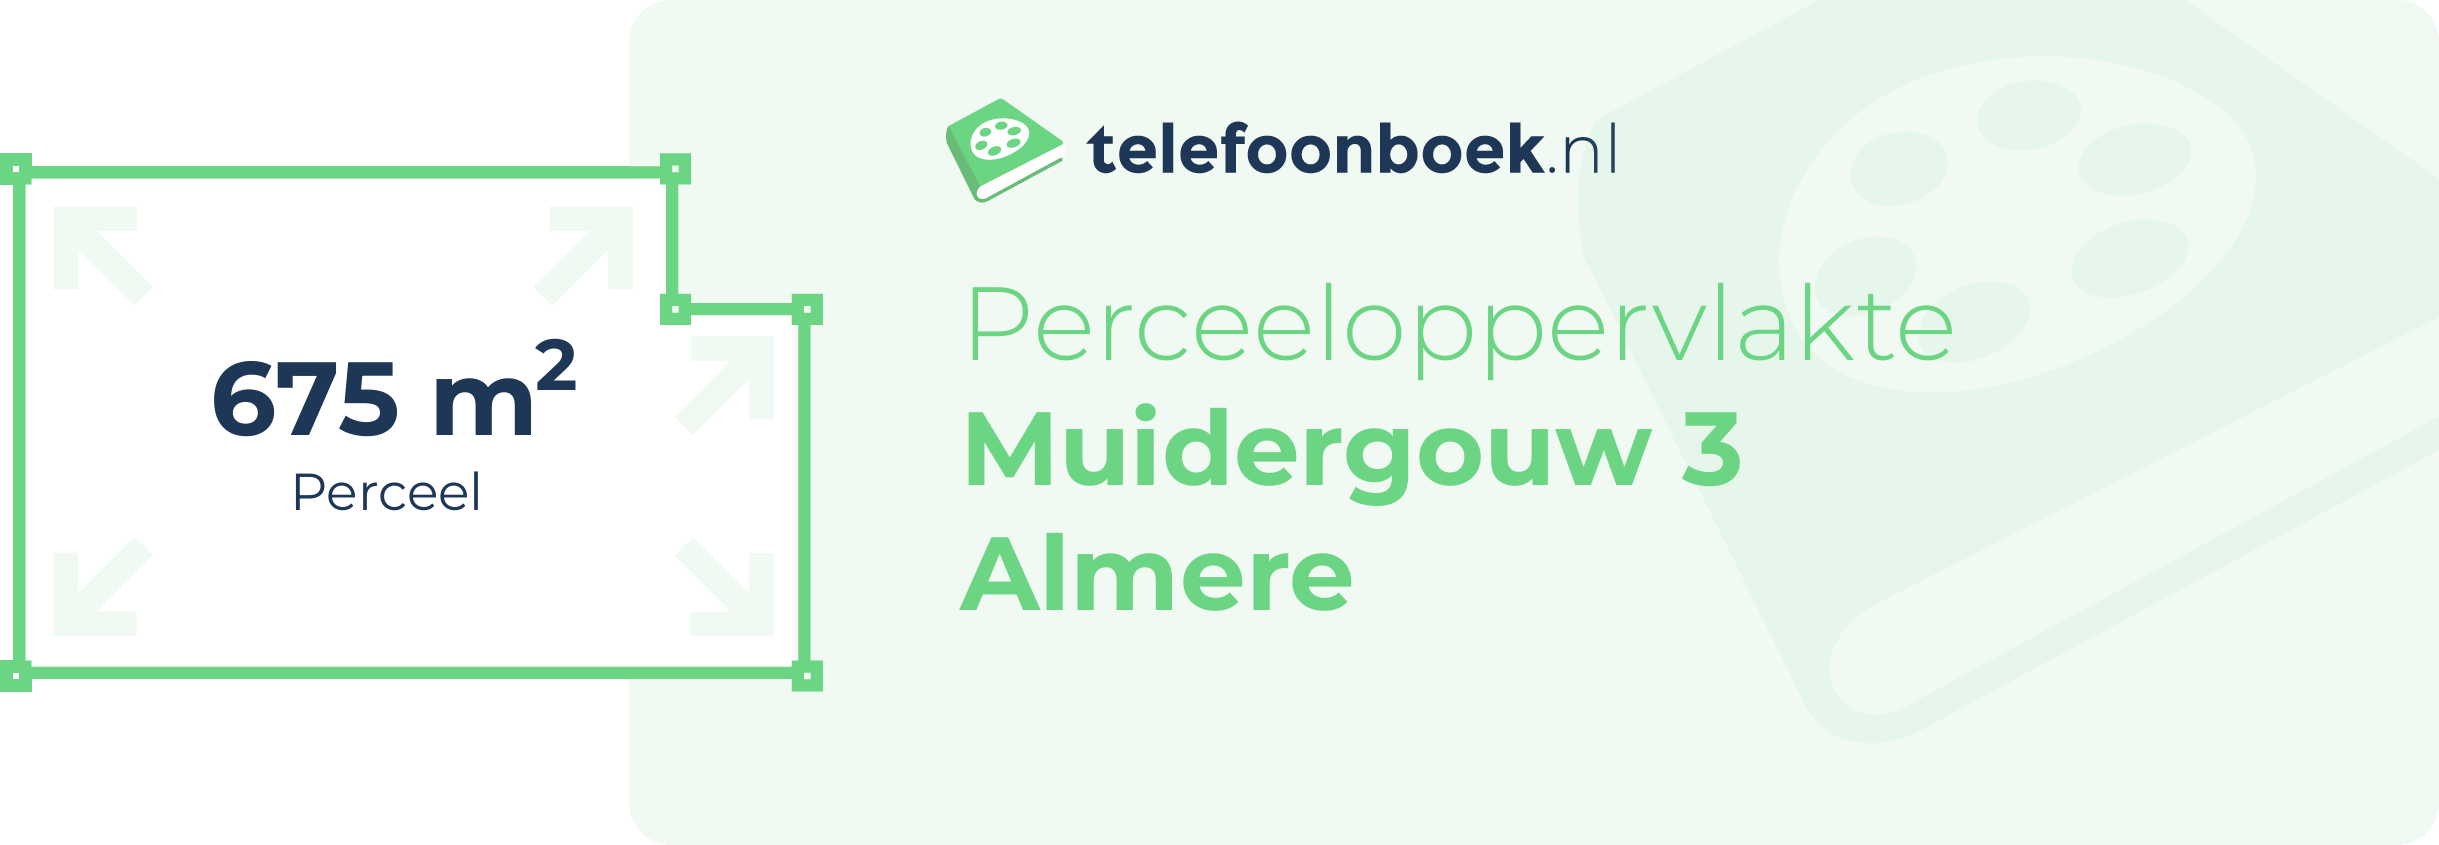 Perceeloppervlakte Muidergouw 3 Almere